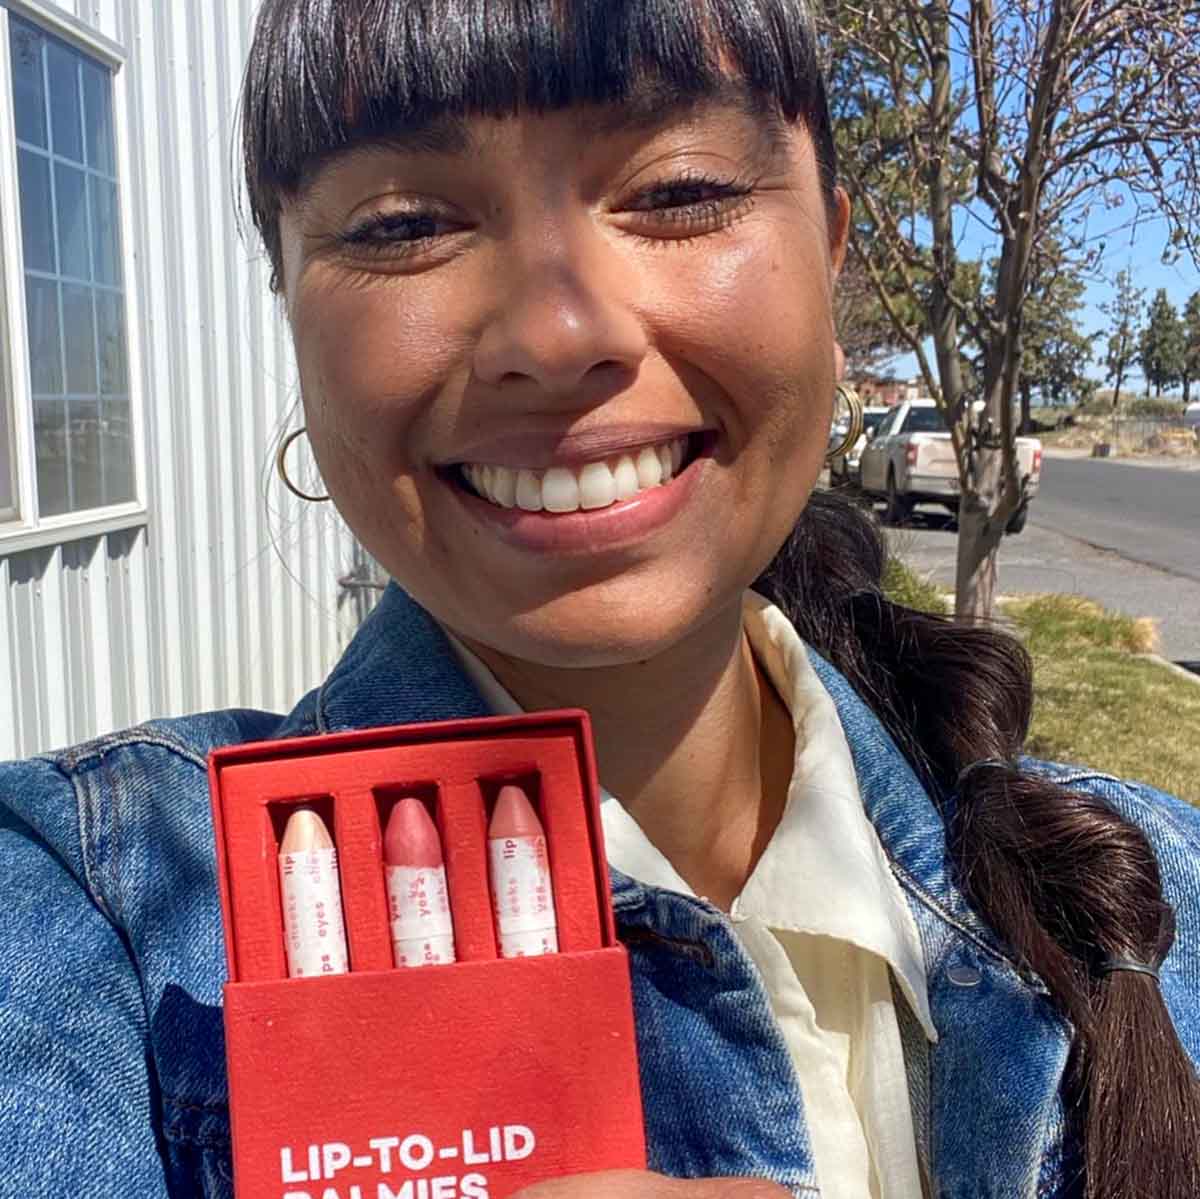 Ericka是一家可持续发展的小型美容公司Axiology的创始人，她在街上微笑着自拍，手里拿着她的产品。